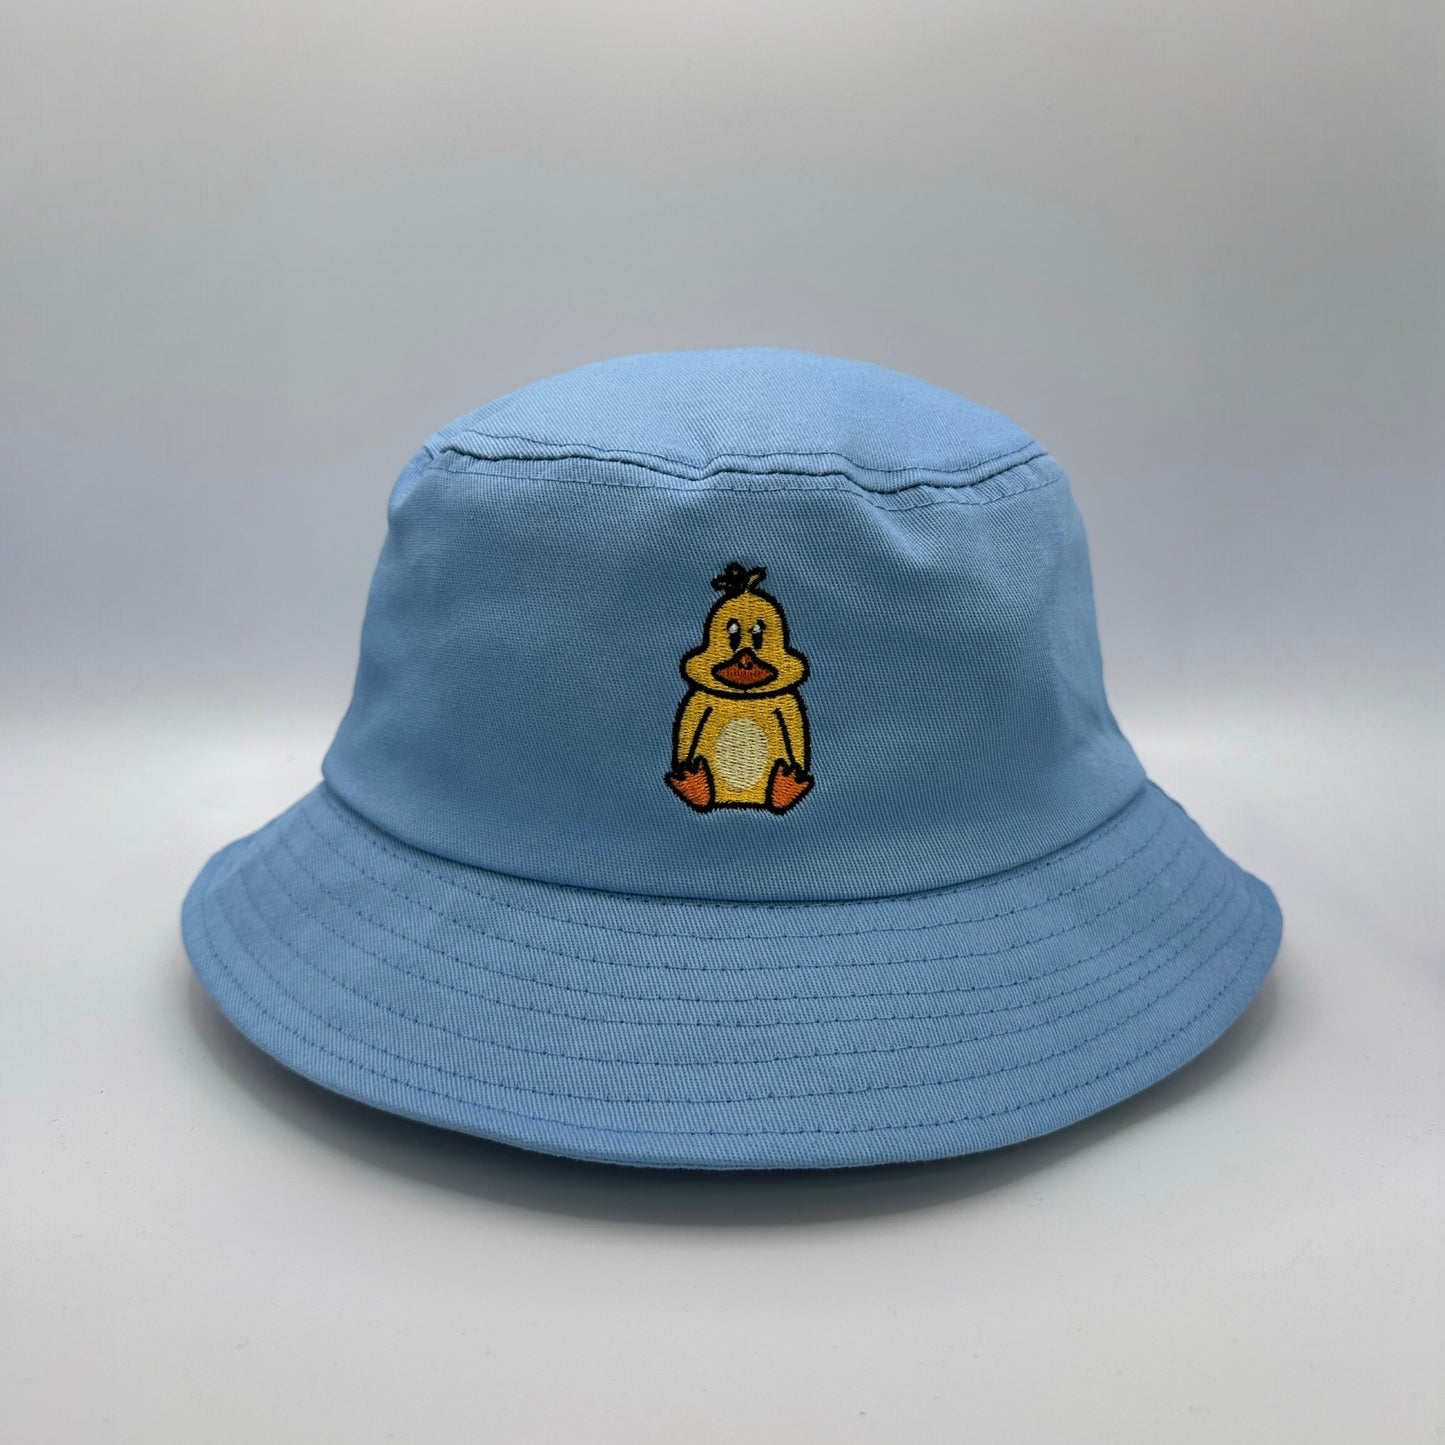 The Official Duckett's Bucket Hat - Blue